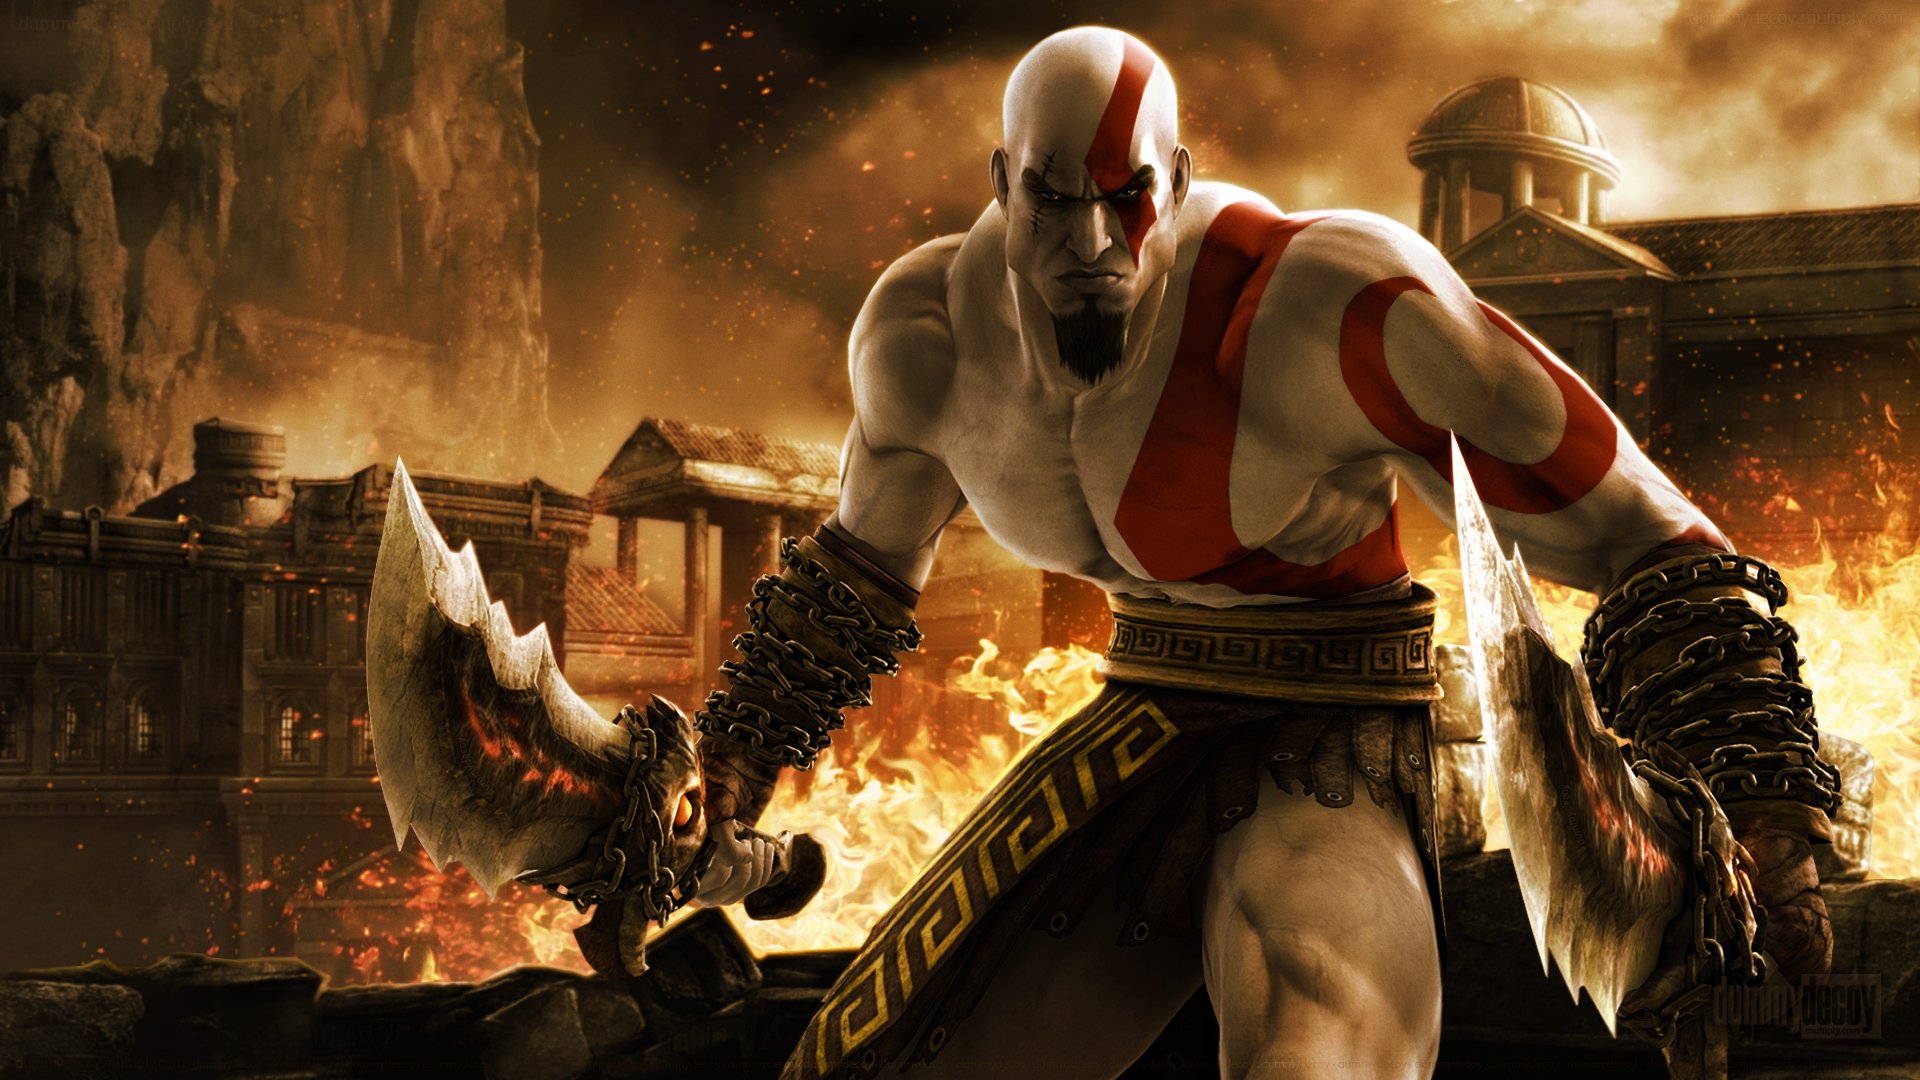 Kratos in God of War Wallpapers HD Wallpapers 1920x1080